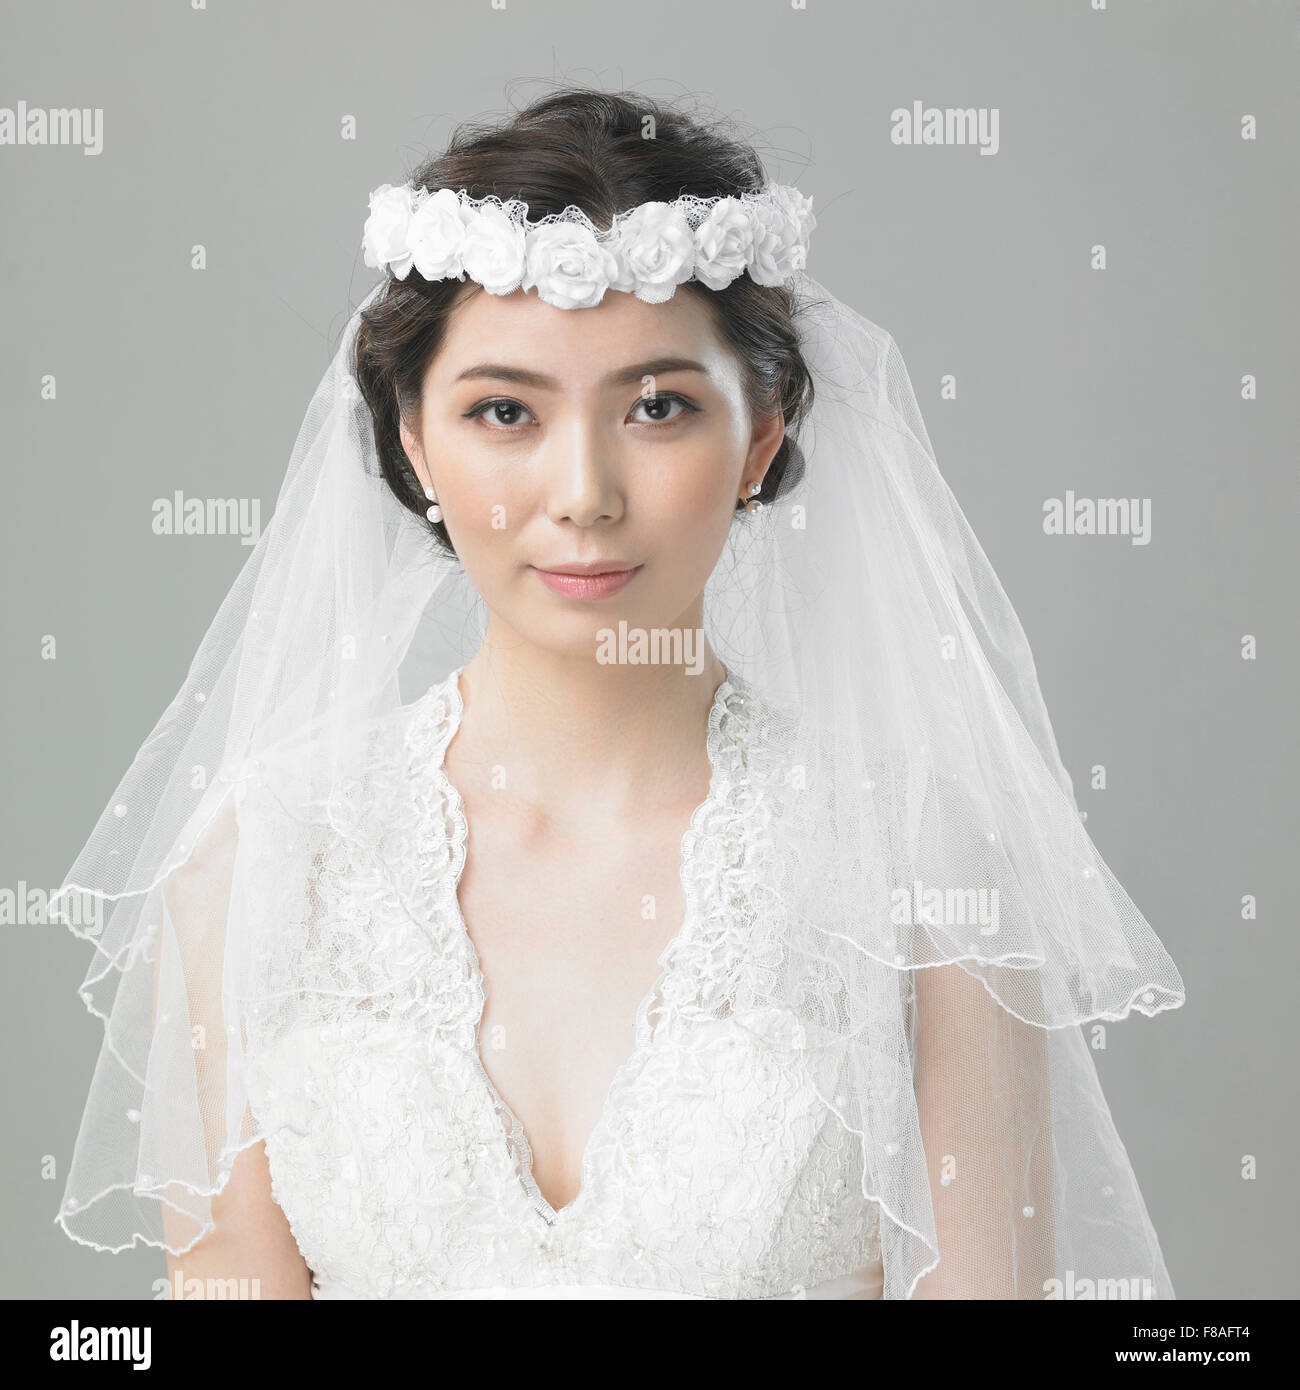 Korean bride in wedding dress with wedding veil Stock Photo